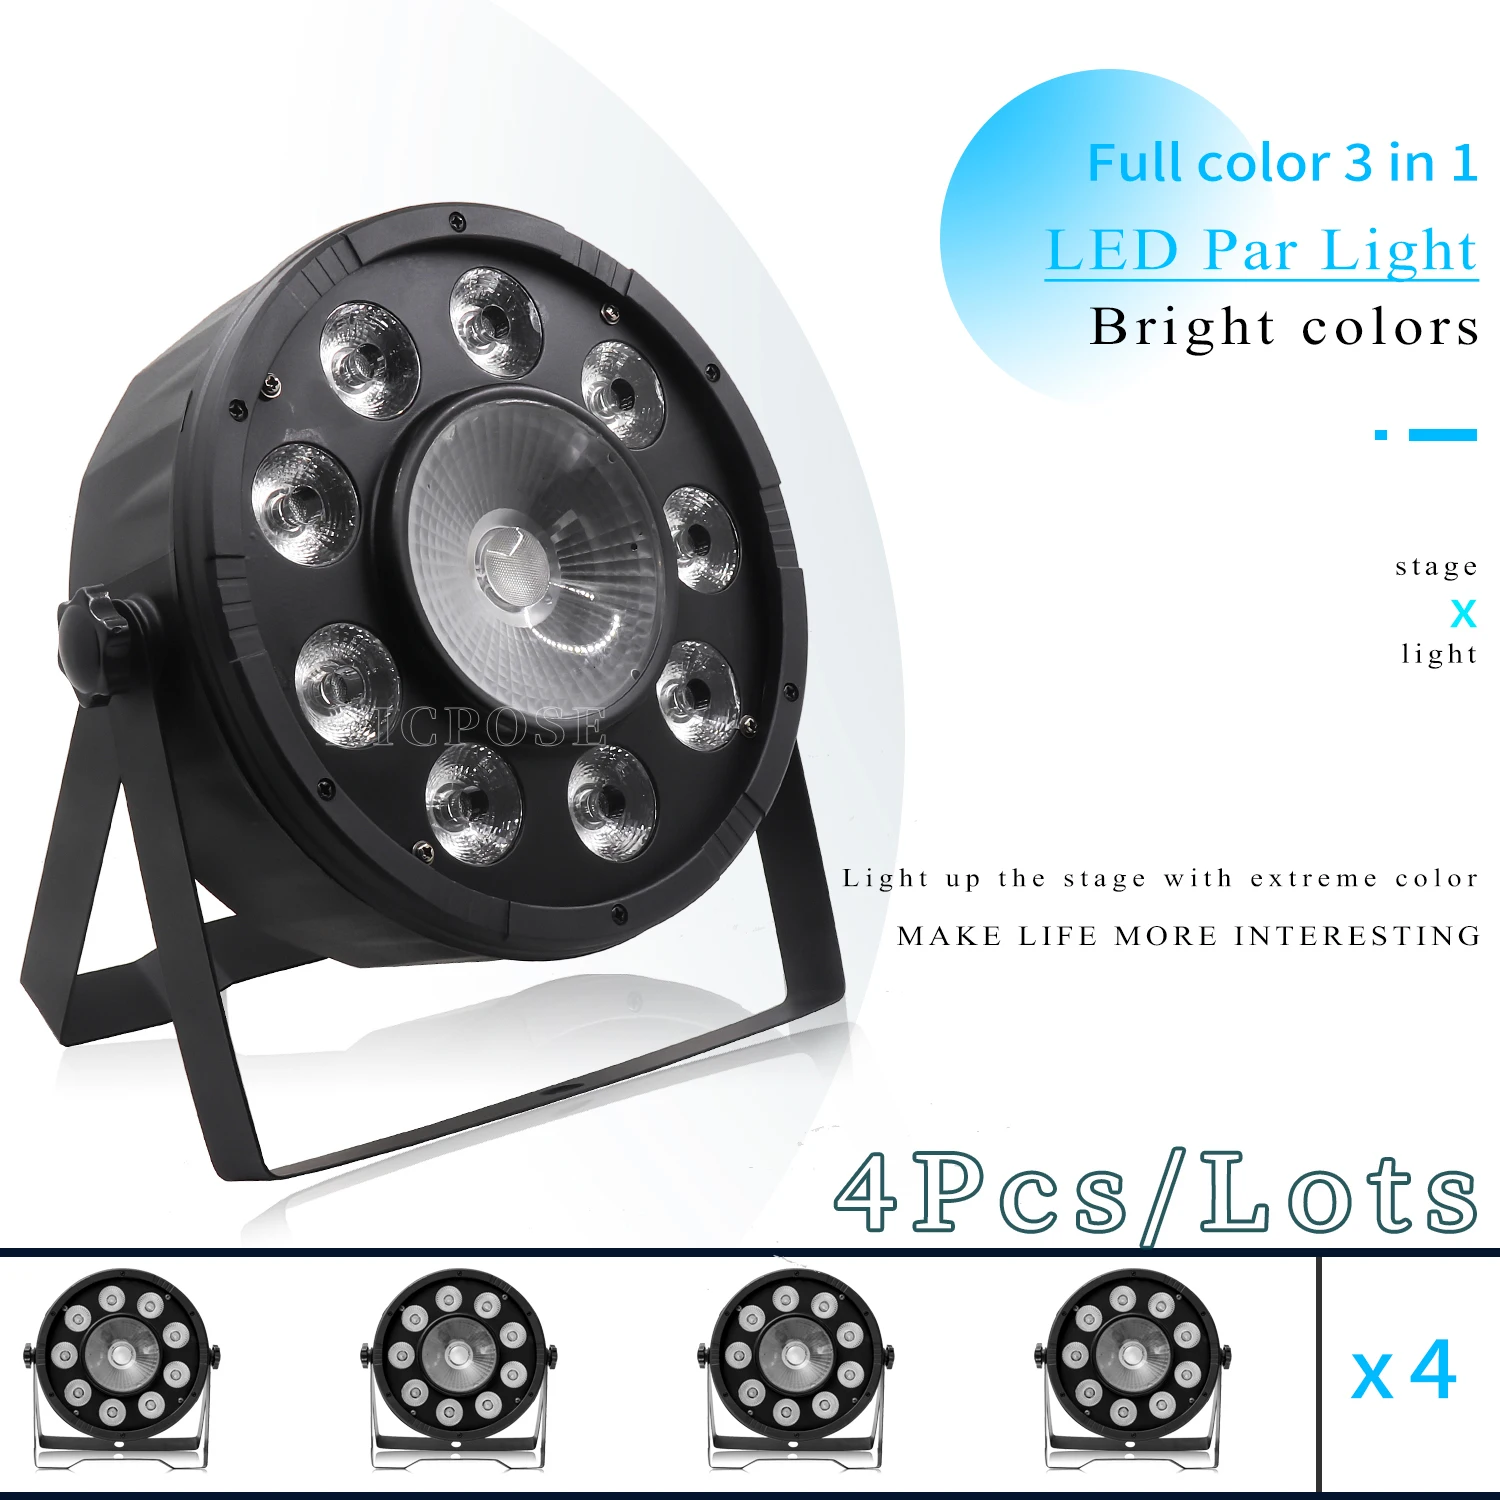 

4Pcs/Lots 25° 9x10W+30w Flat LED Par Light RGB 3IN1 PAR DMX512 Control Disco Light Professional Stage DJ Equipment